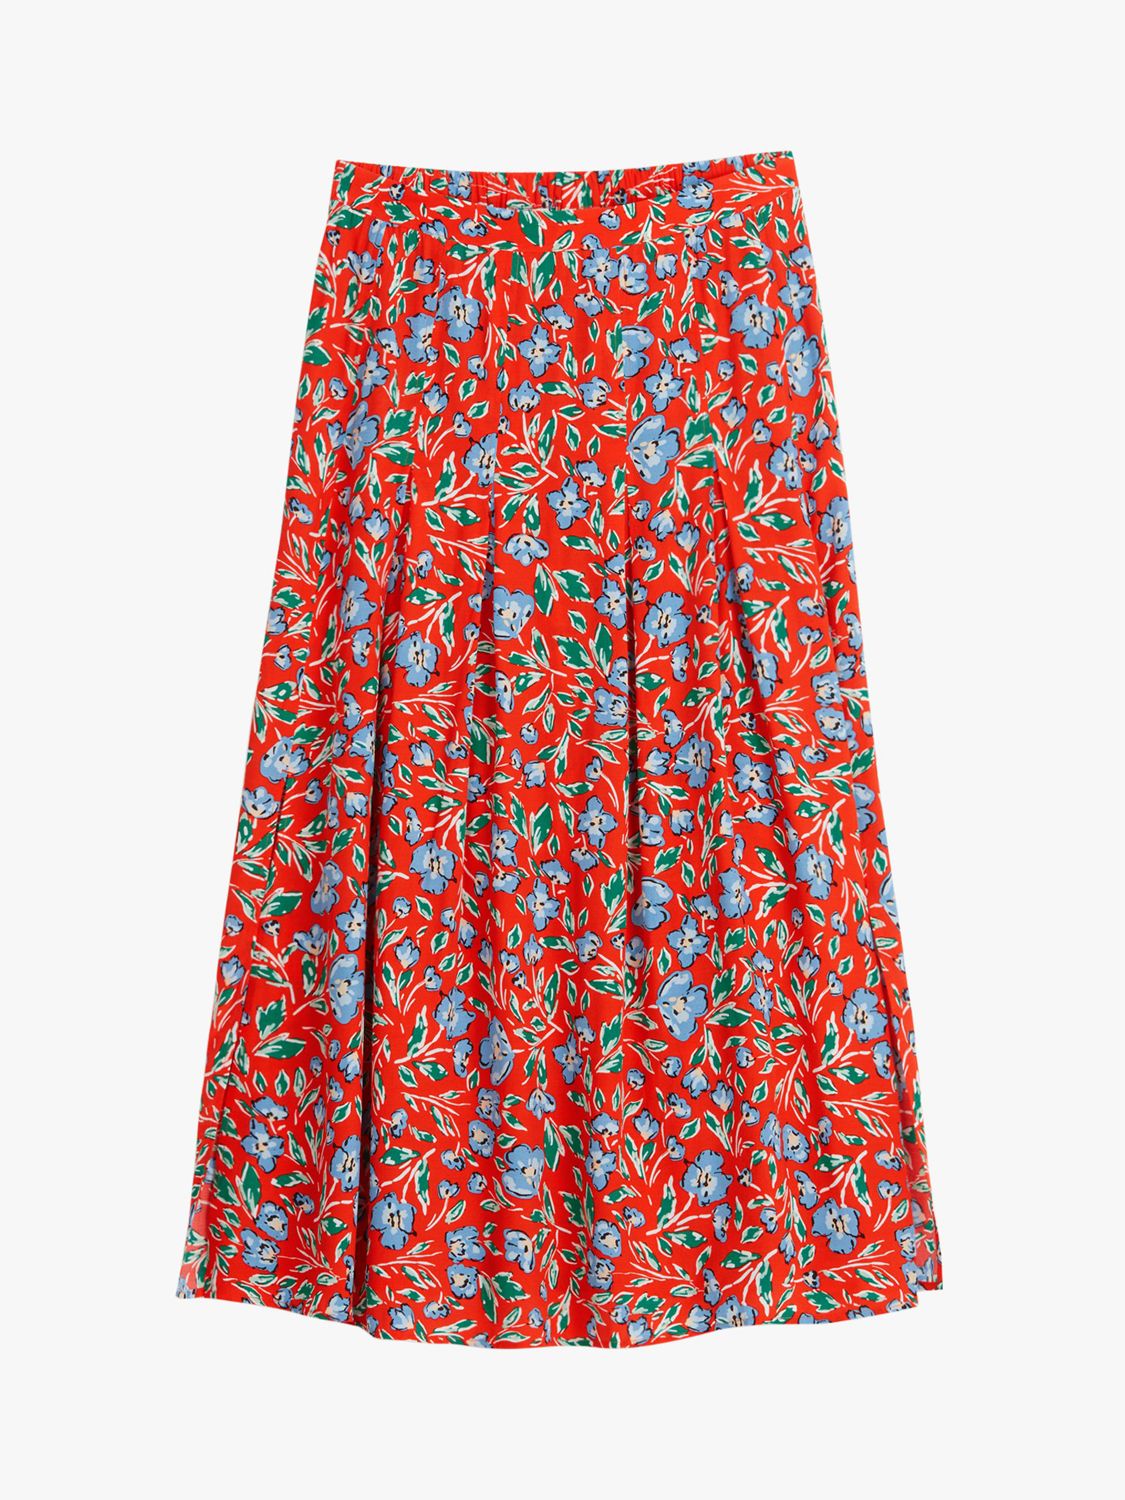 hush Kylie Pleated Floral Midi Skirt, Red/Multi at John Lewis & Partners